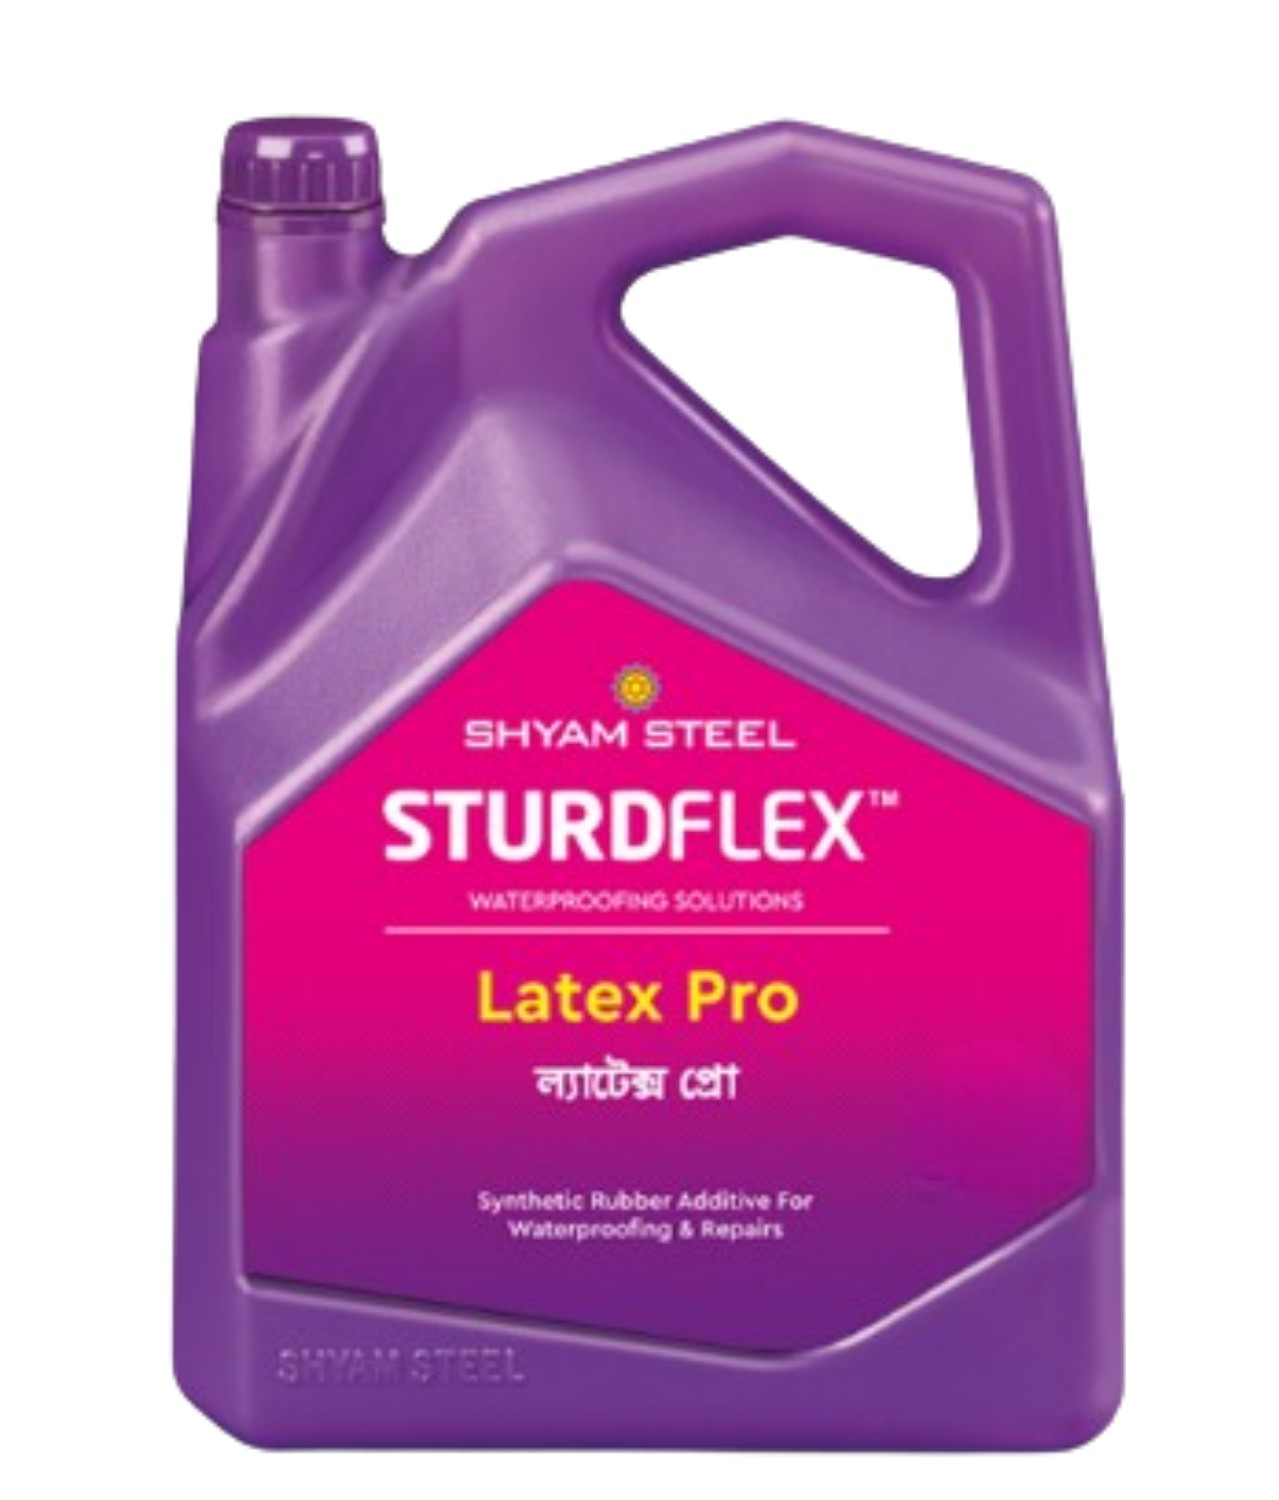 STURDFLEX LatexPro Waterproofing Chemical in Kilogram_0